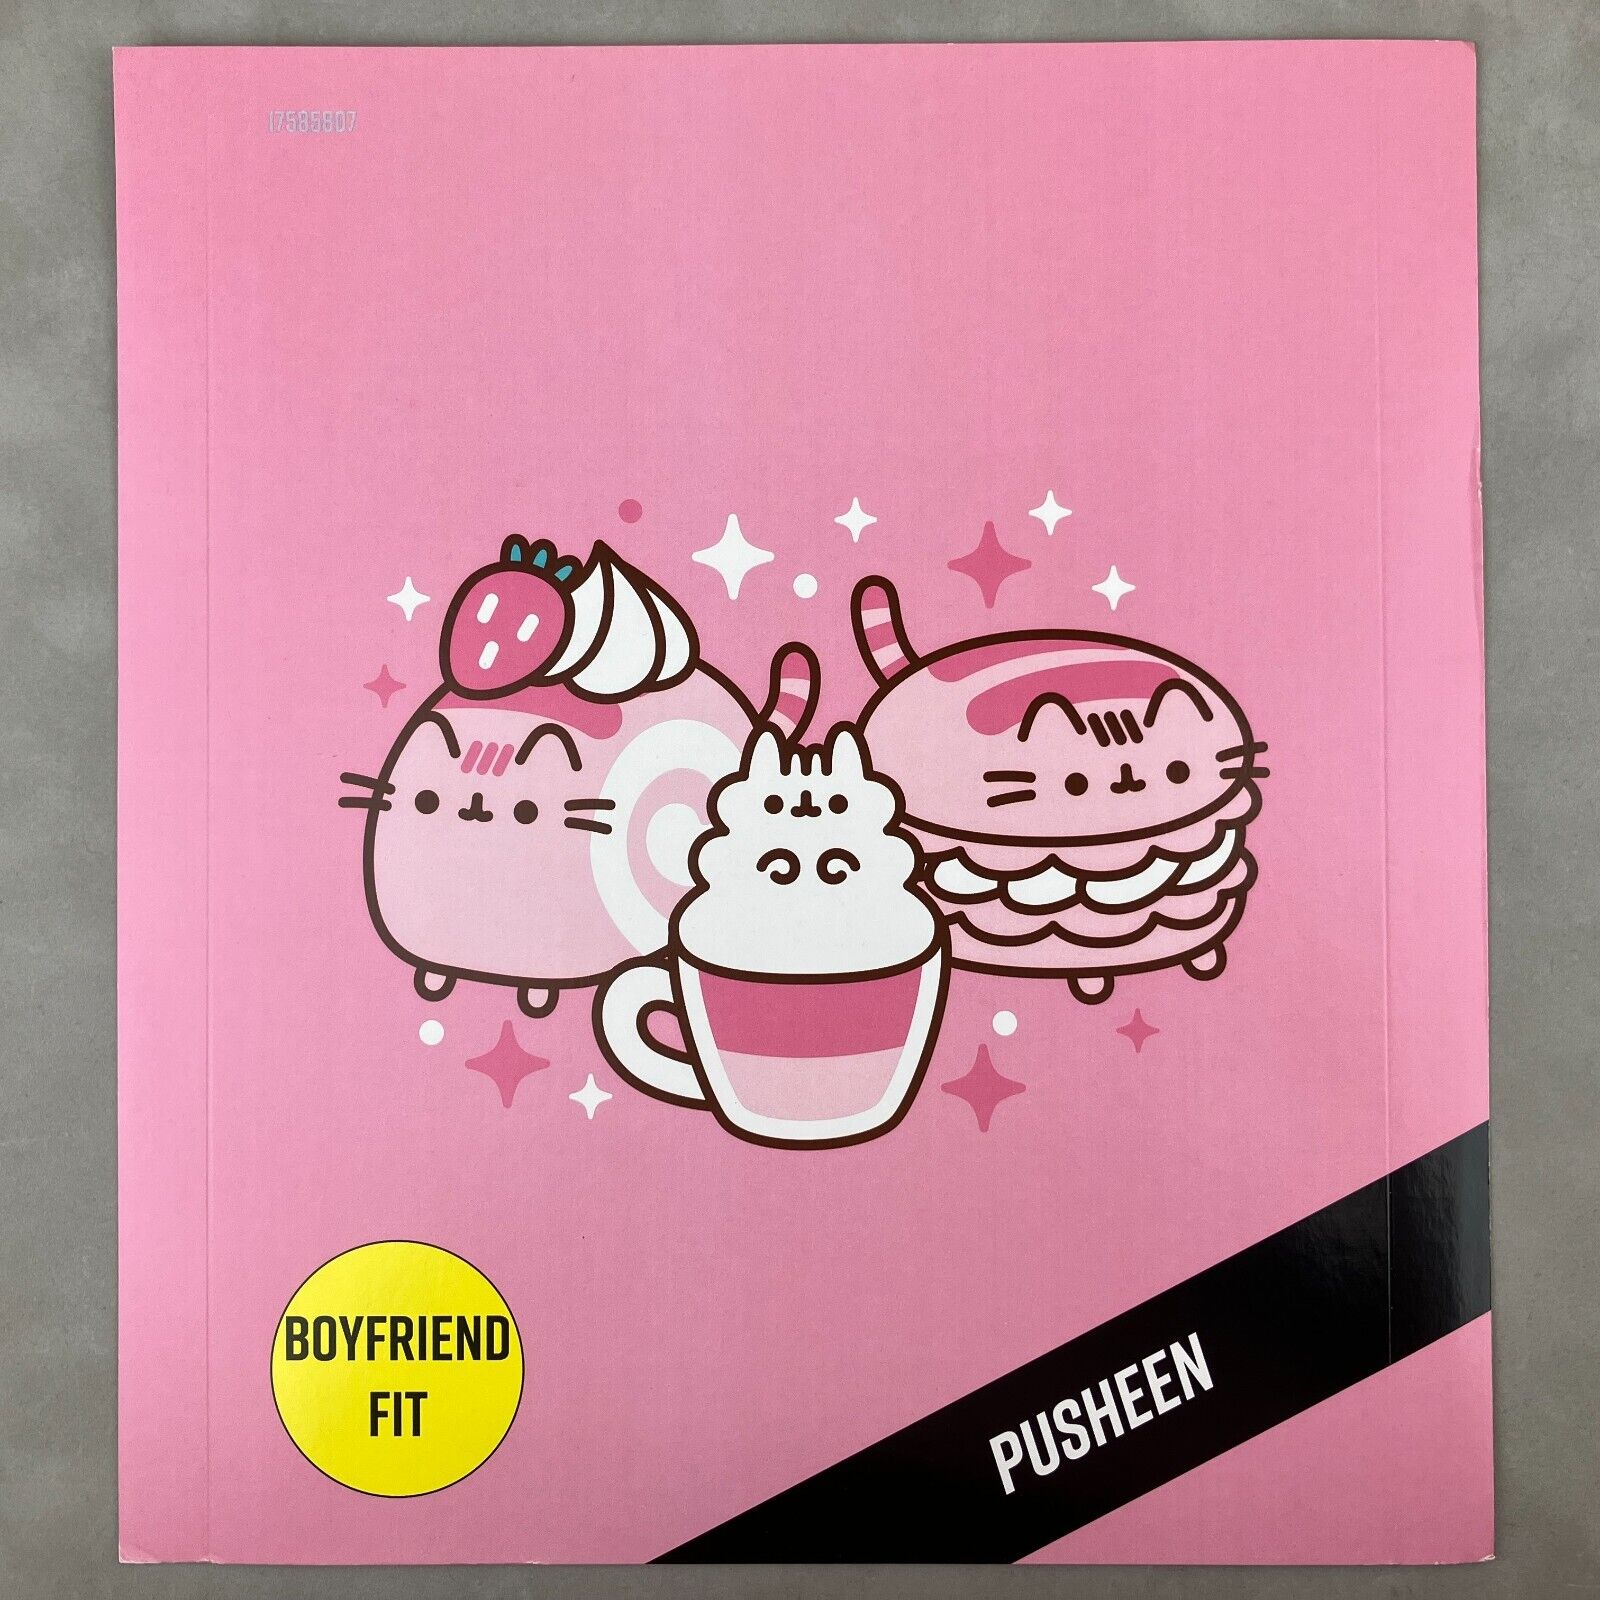 Pusheen Sweets Dessert Pink Hot Topic T-Shirt Store Display Poster Print